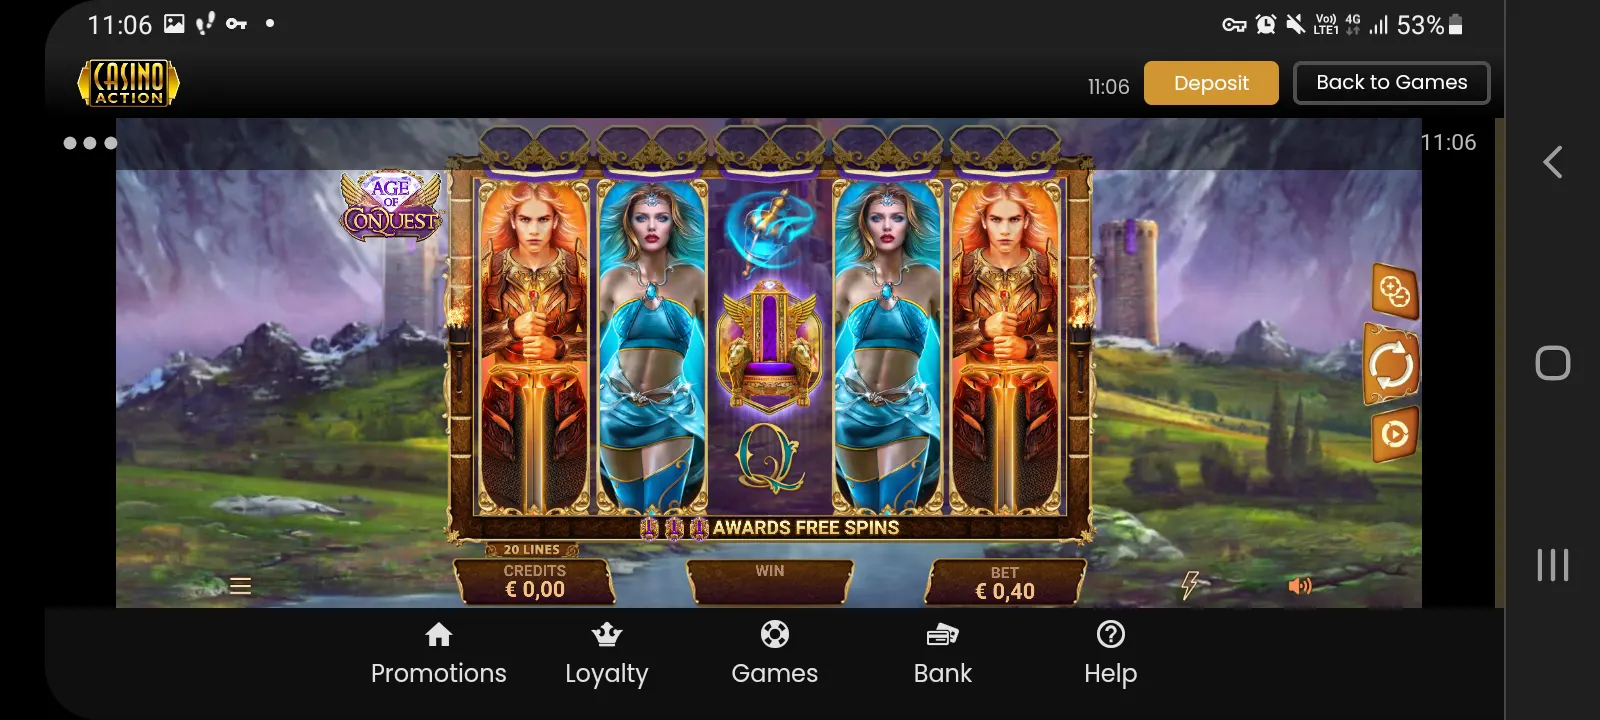 Casino Action app screenshot 2